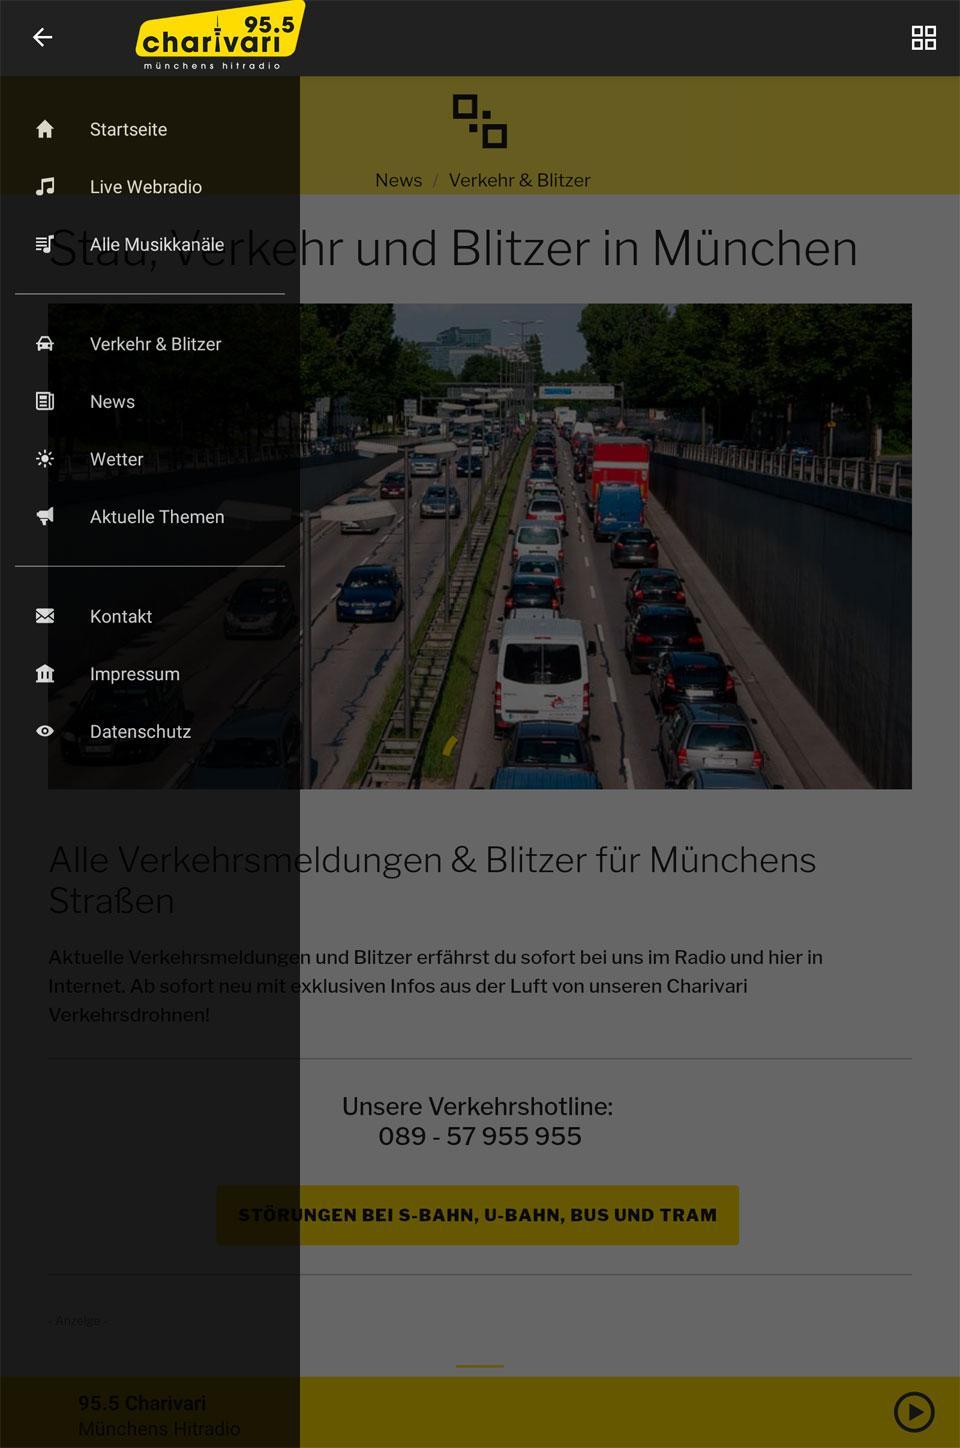 Radio 95.5 Charivari München for Android - APK Download